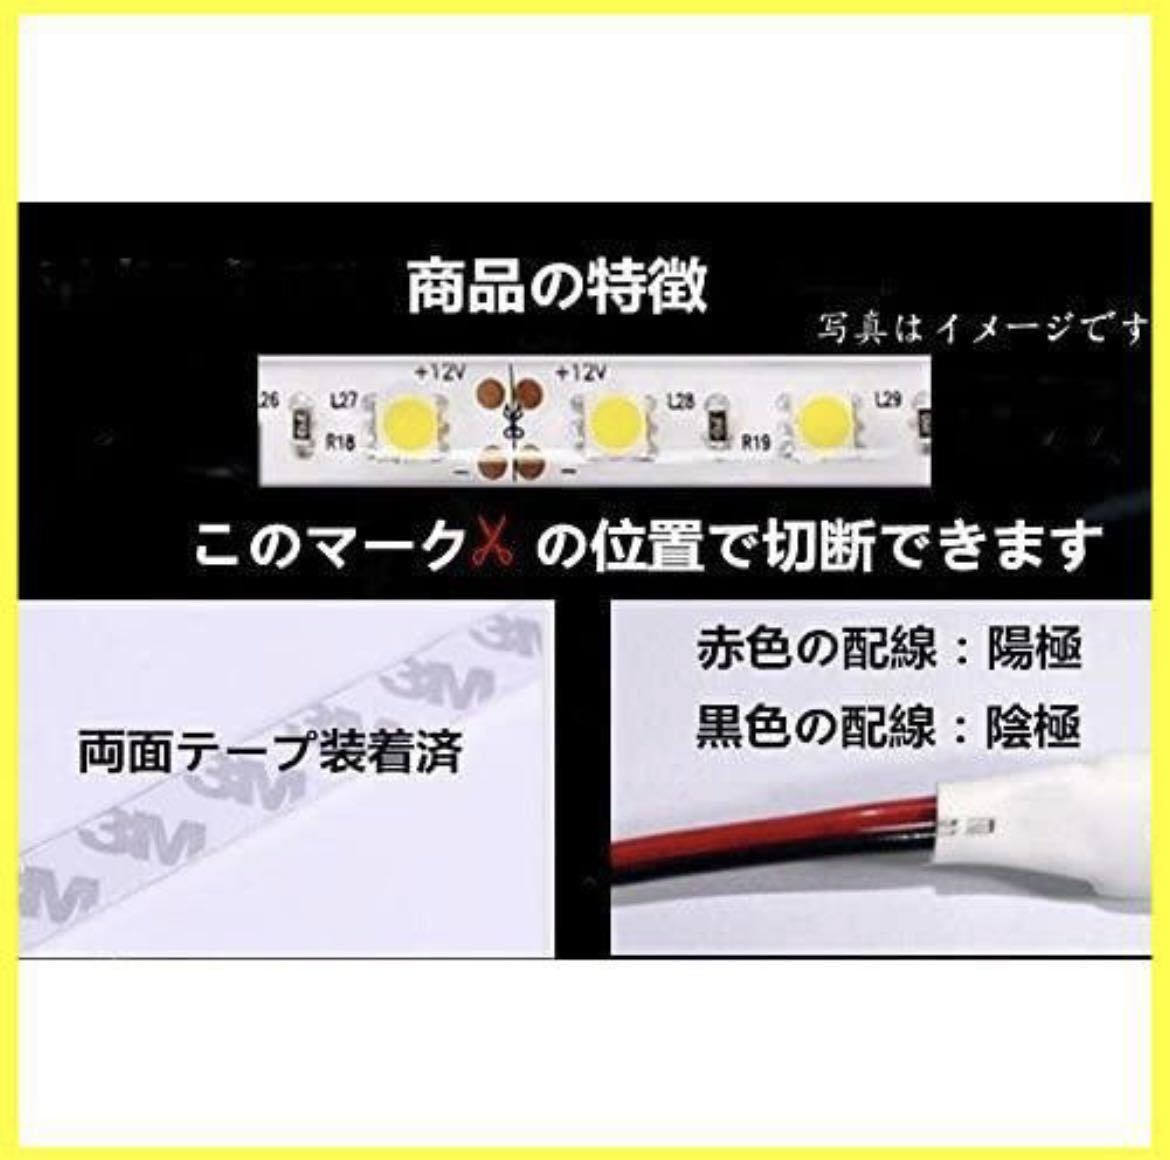 LEDテープライト白ベース5050両面テープ5m防水300ストリップライト(緑)